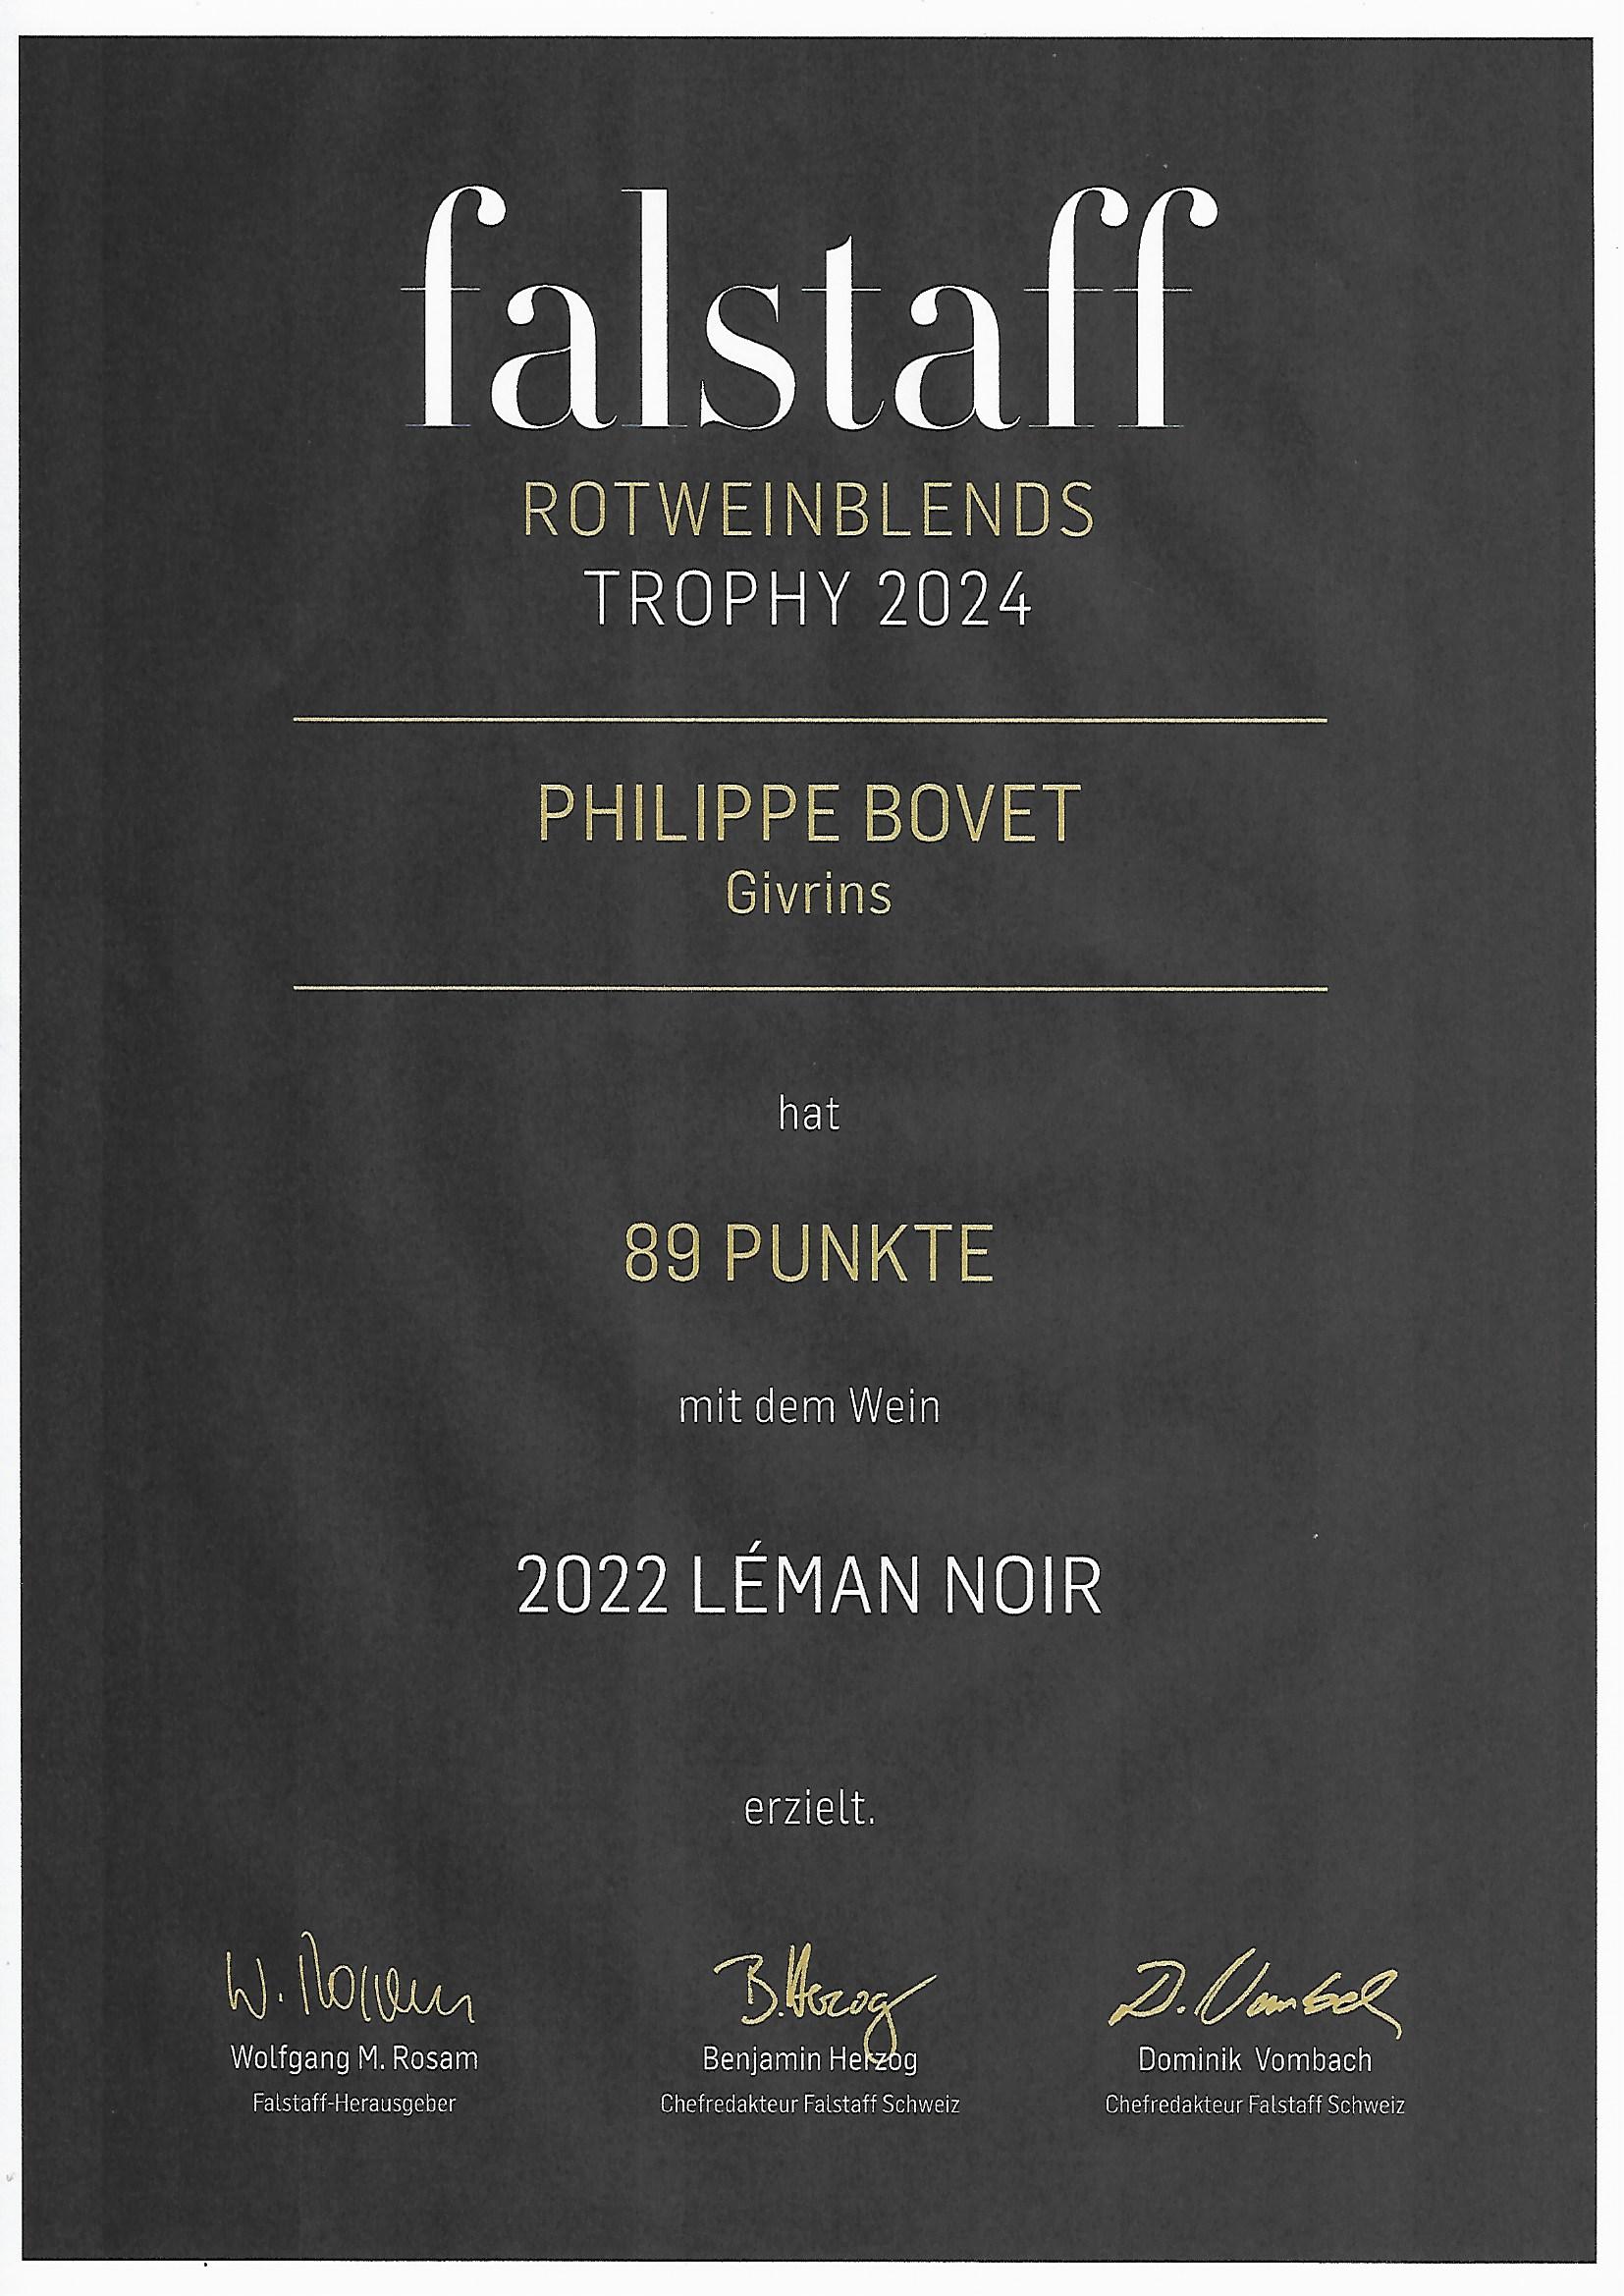 falstaff Trophy 2024